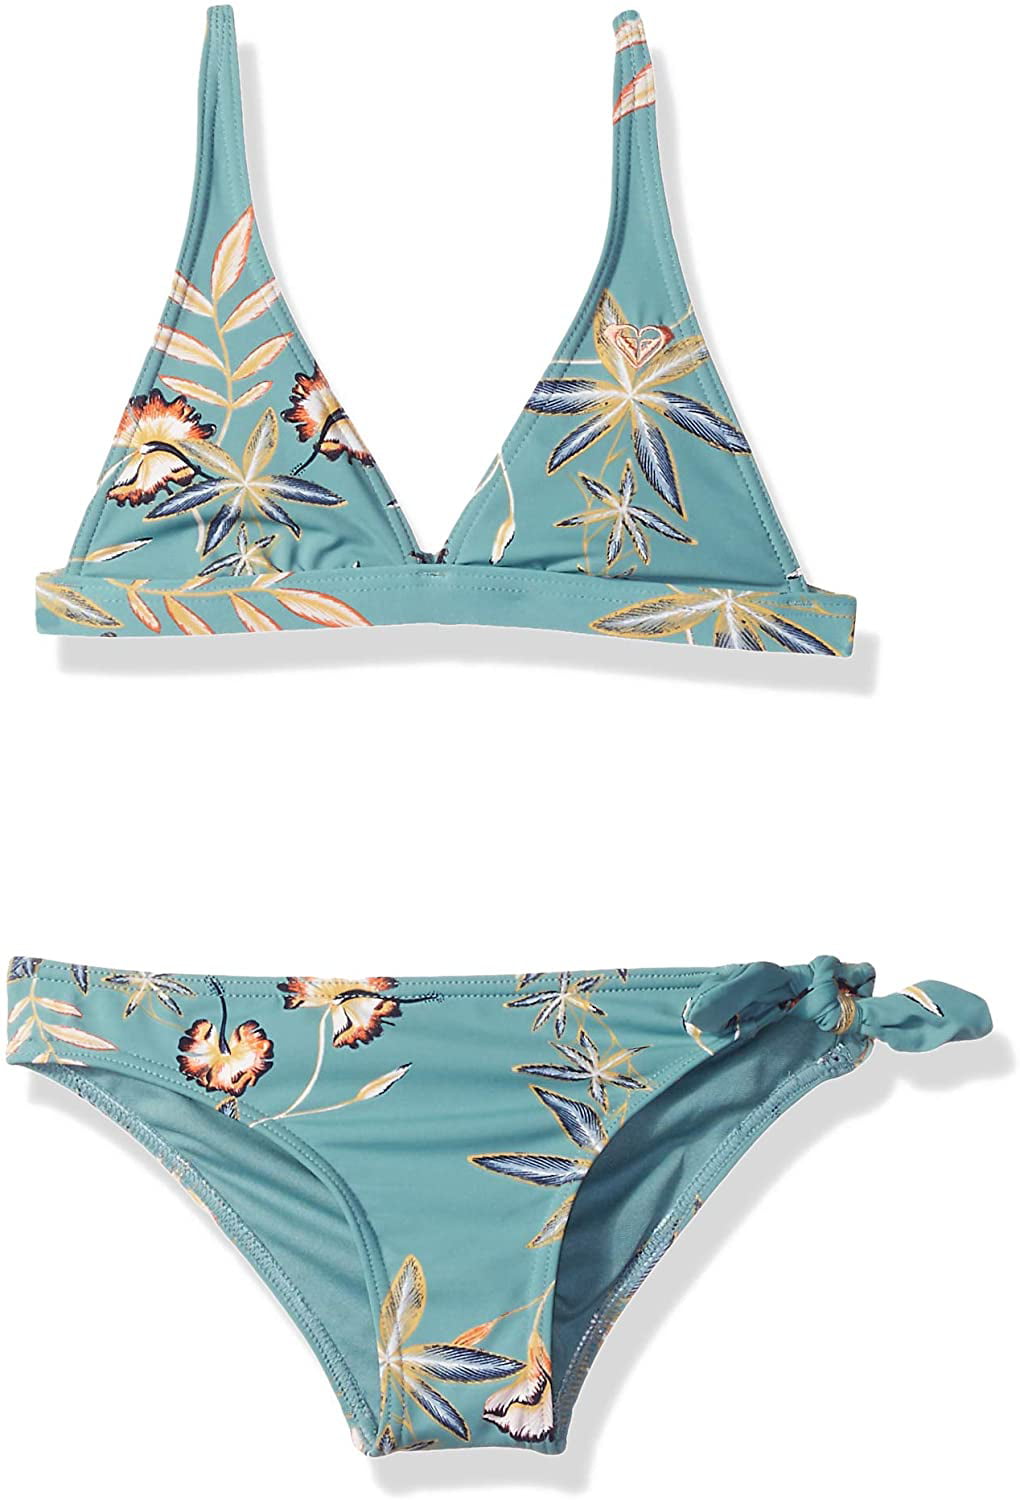 Roxy - Girls Swimwear Born in Waves Two Piece Bikini Set 12 - Walmart ...